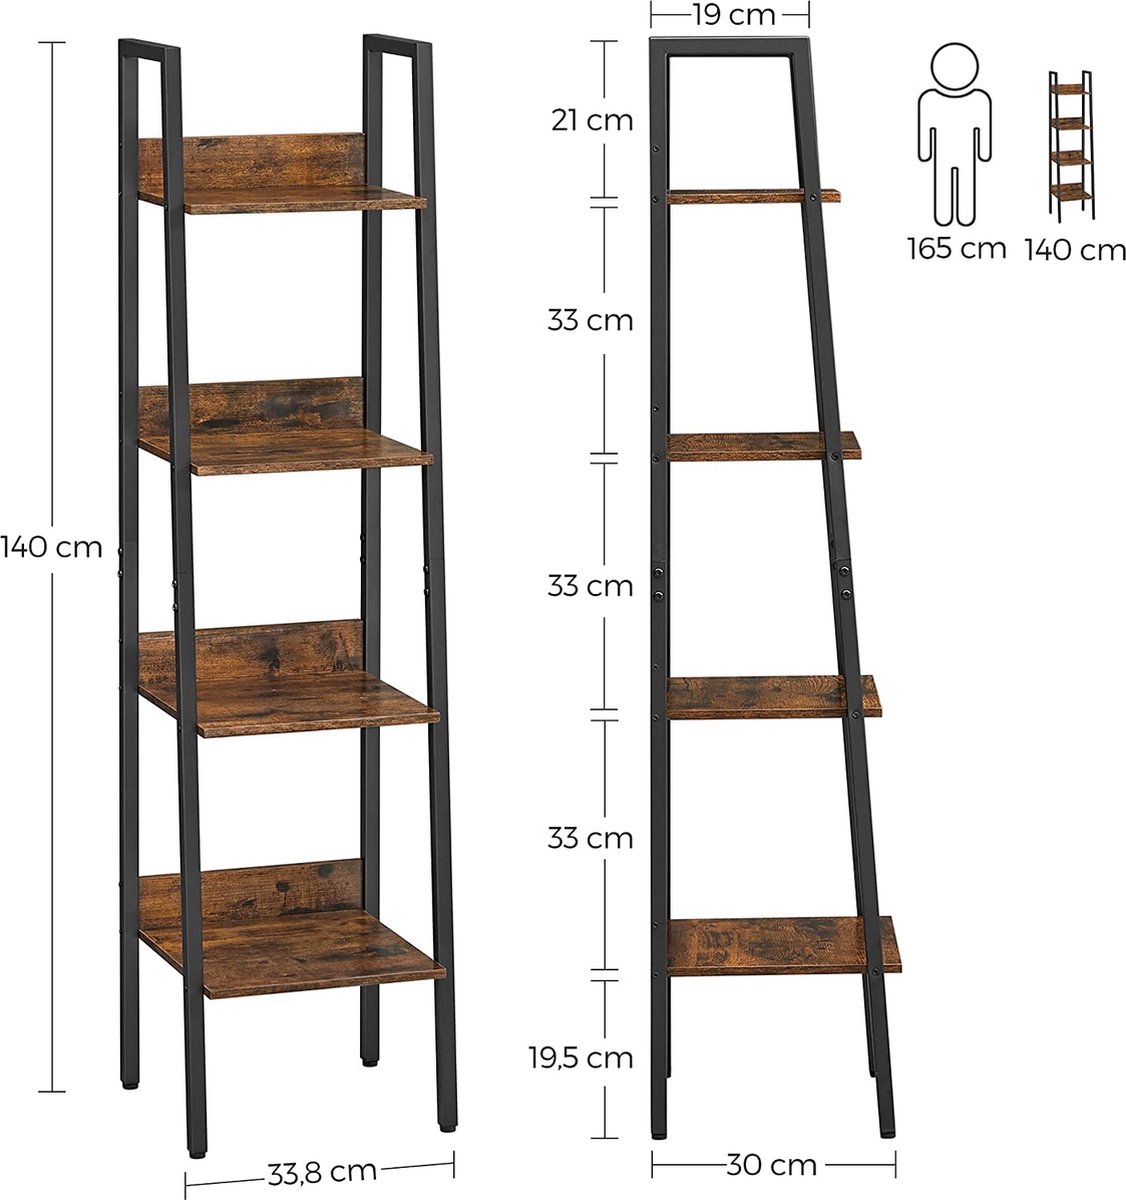 FURNIBELLA - boekenkast, ladder plank, open, met 4 niveaus, metalen frame, voor woonkamer, slaapkamer, keuken, studeerkamer, kantoor, industrieel ontwerp, vintage bruin-zwart LLS108B01